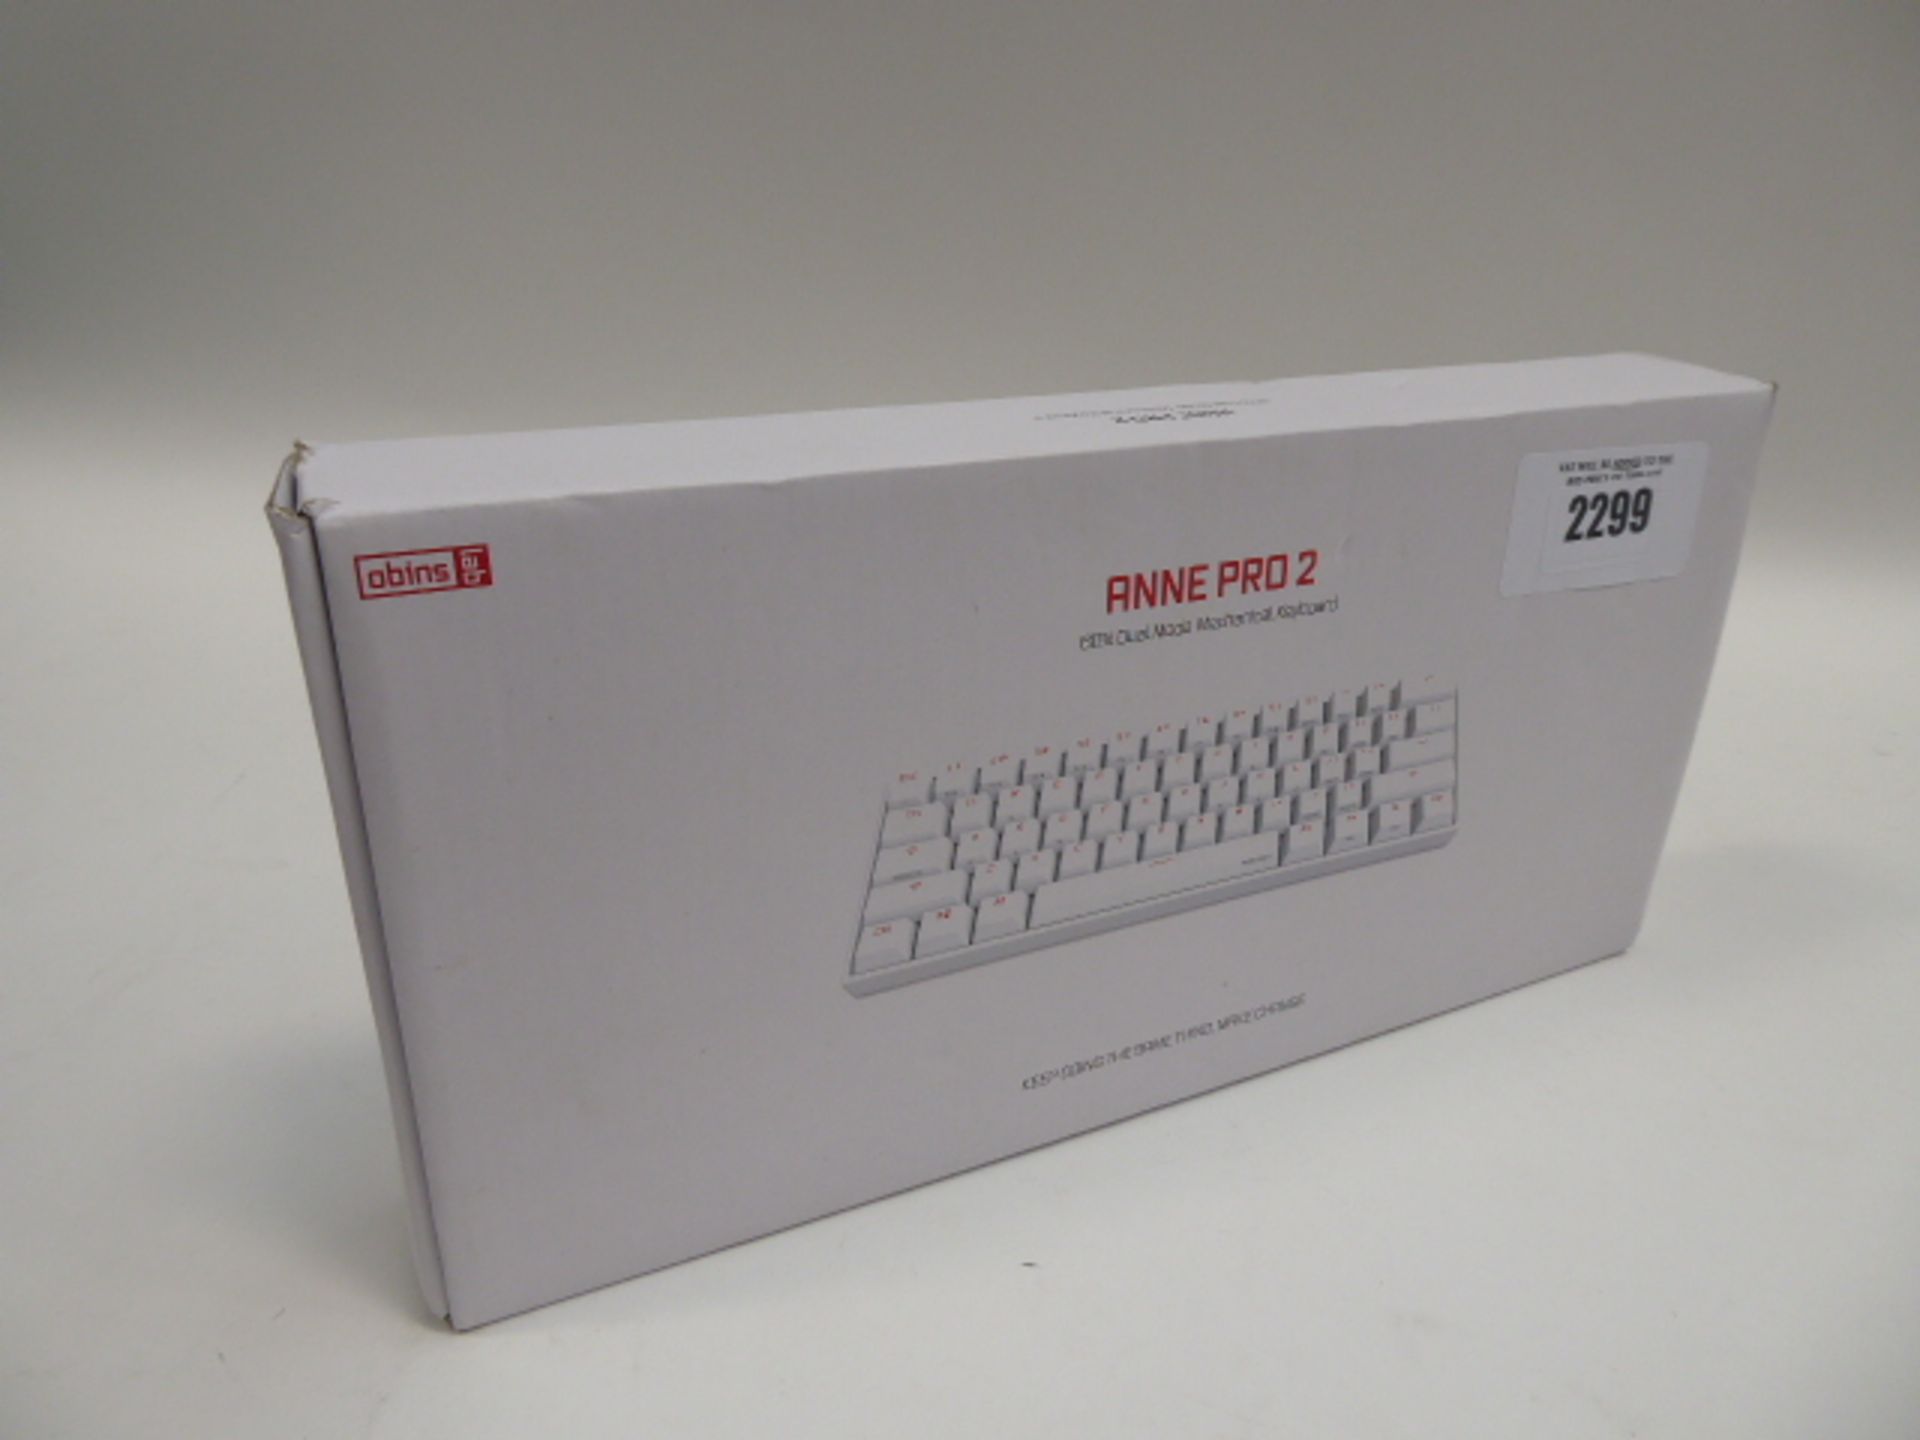 Anne Pro 2 dual mode mechanical keyboard